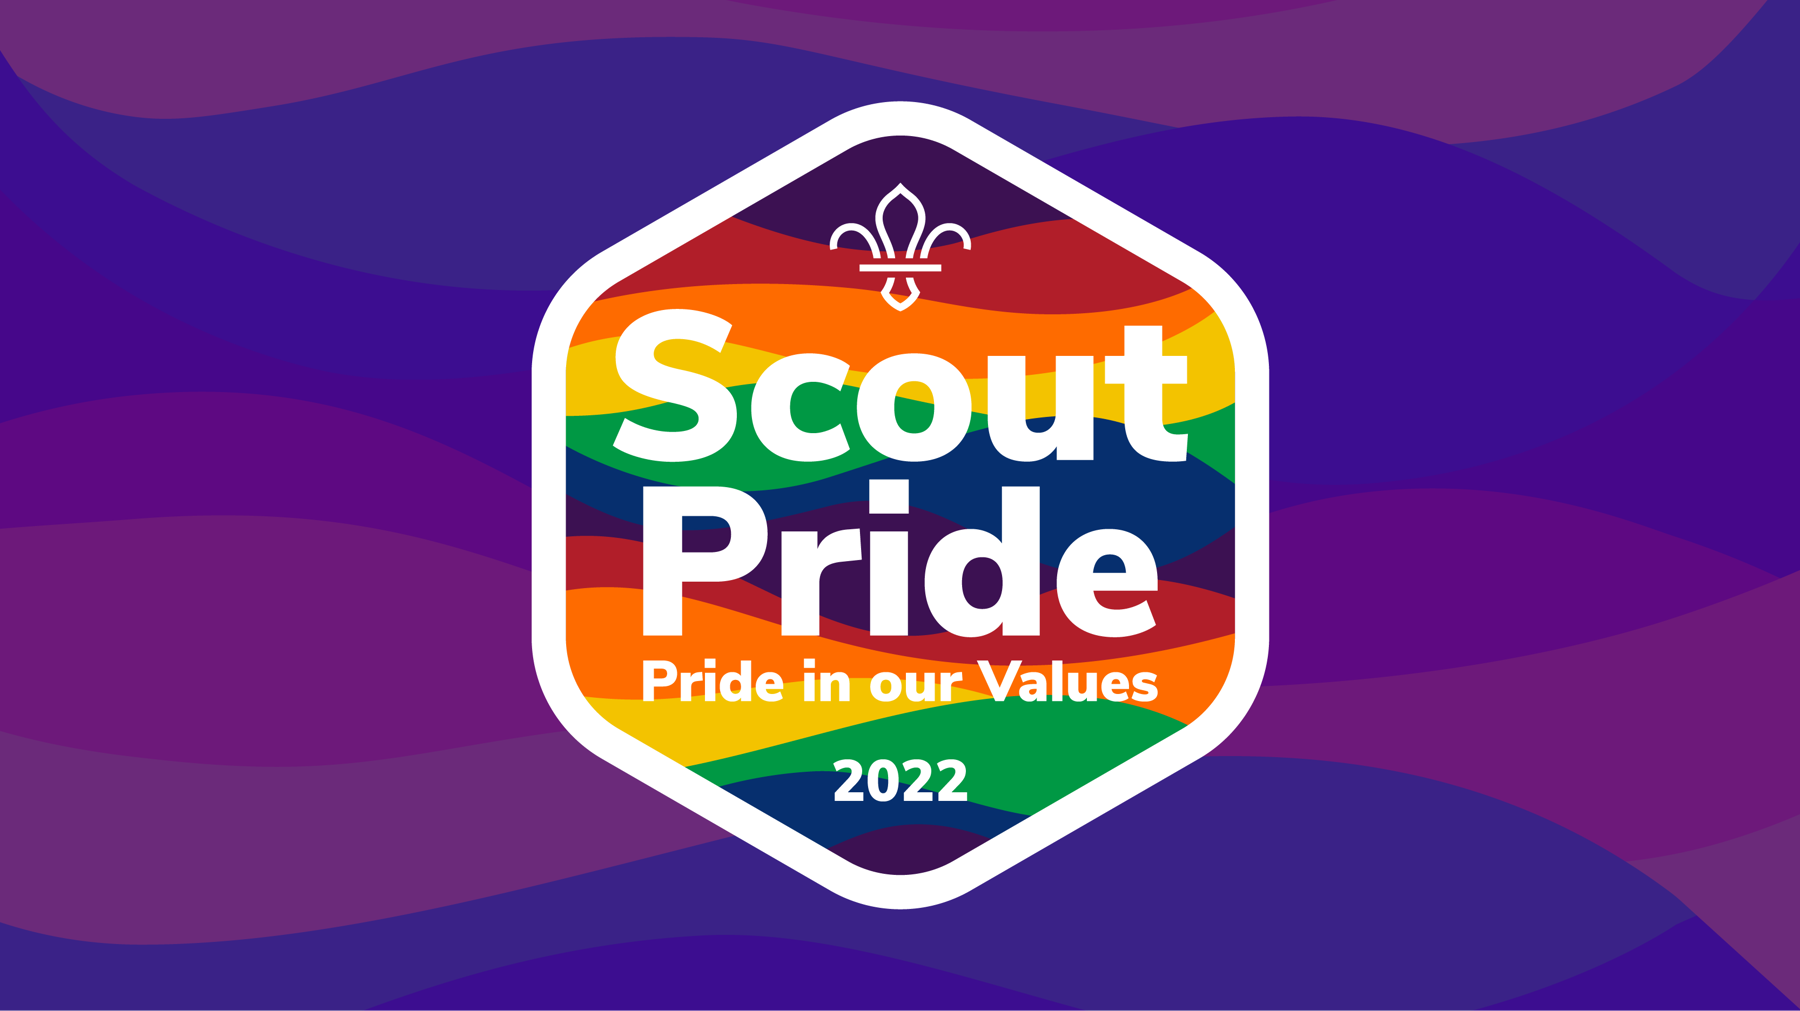 Scout Pride 2022